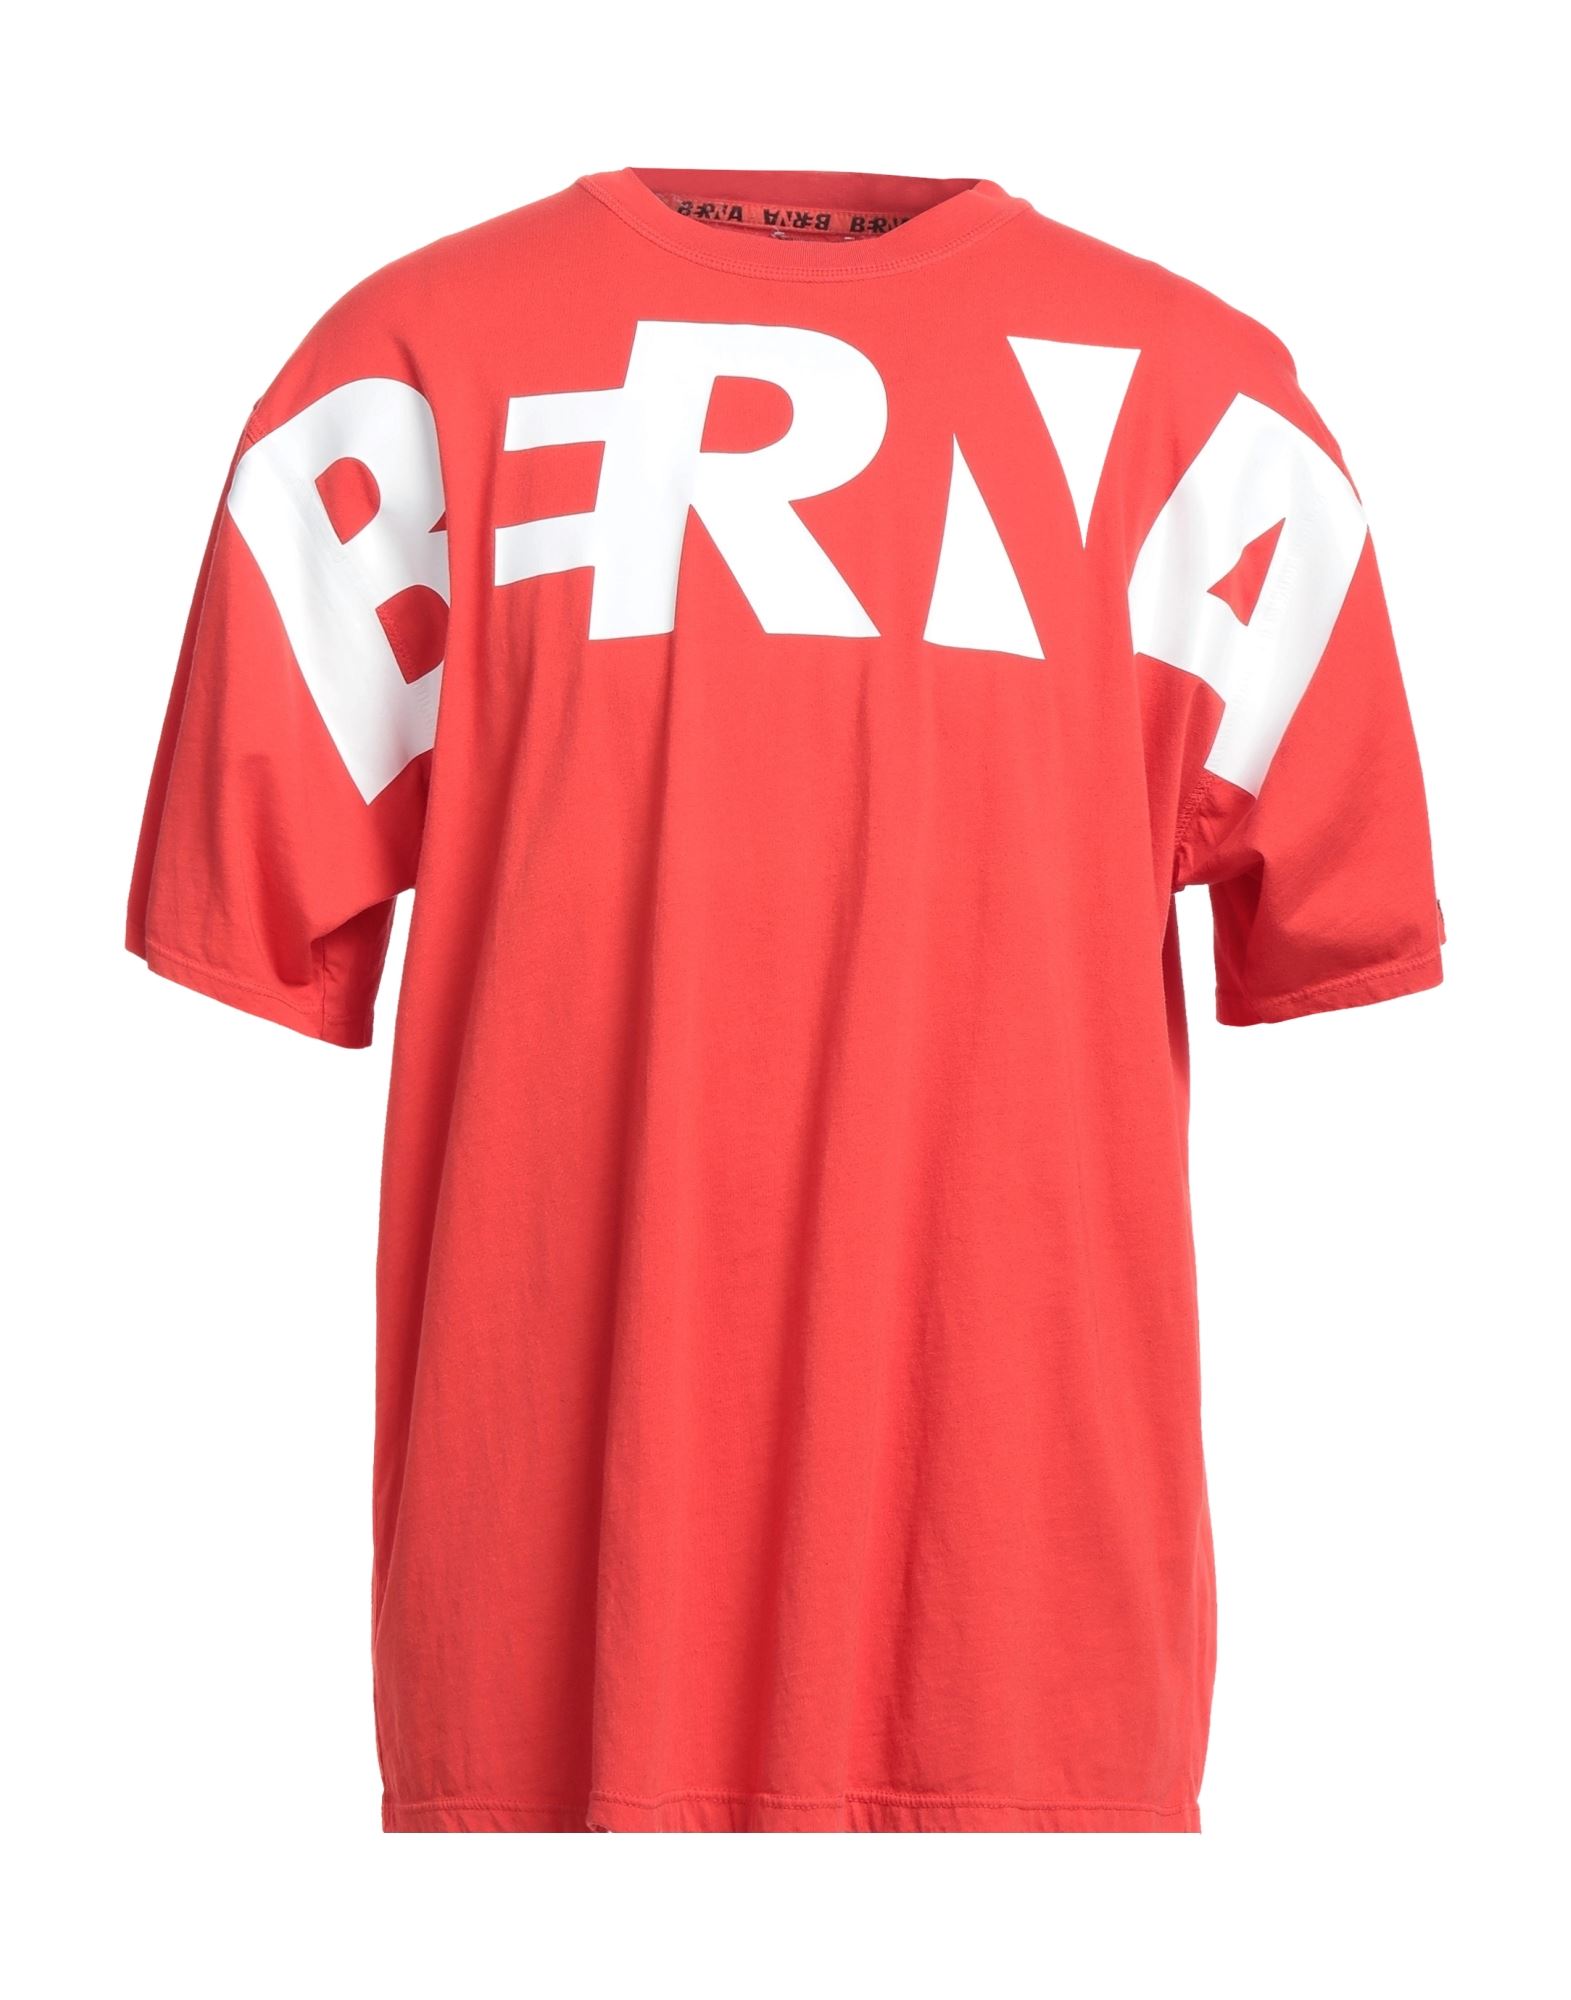 Berna T-shirts In Red